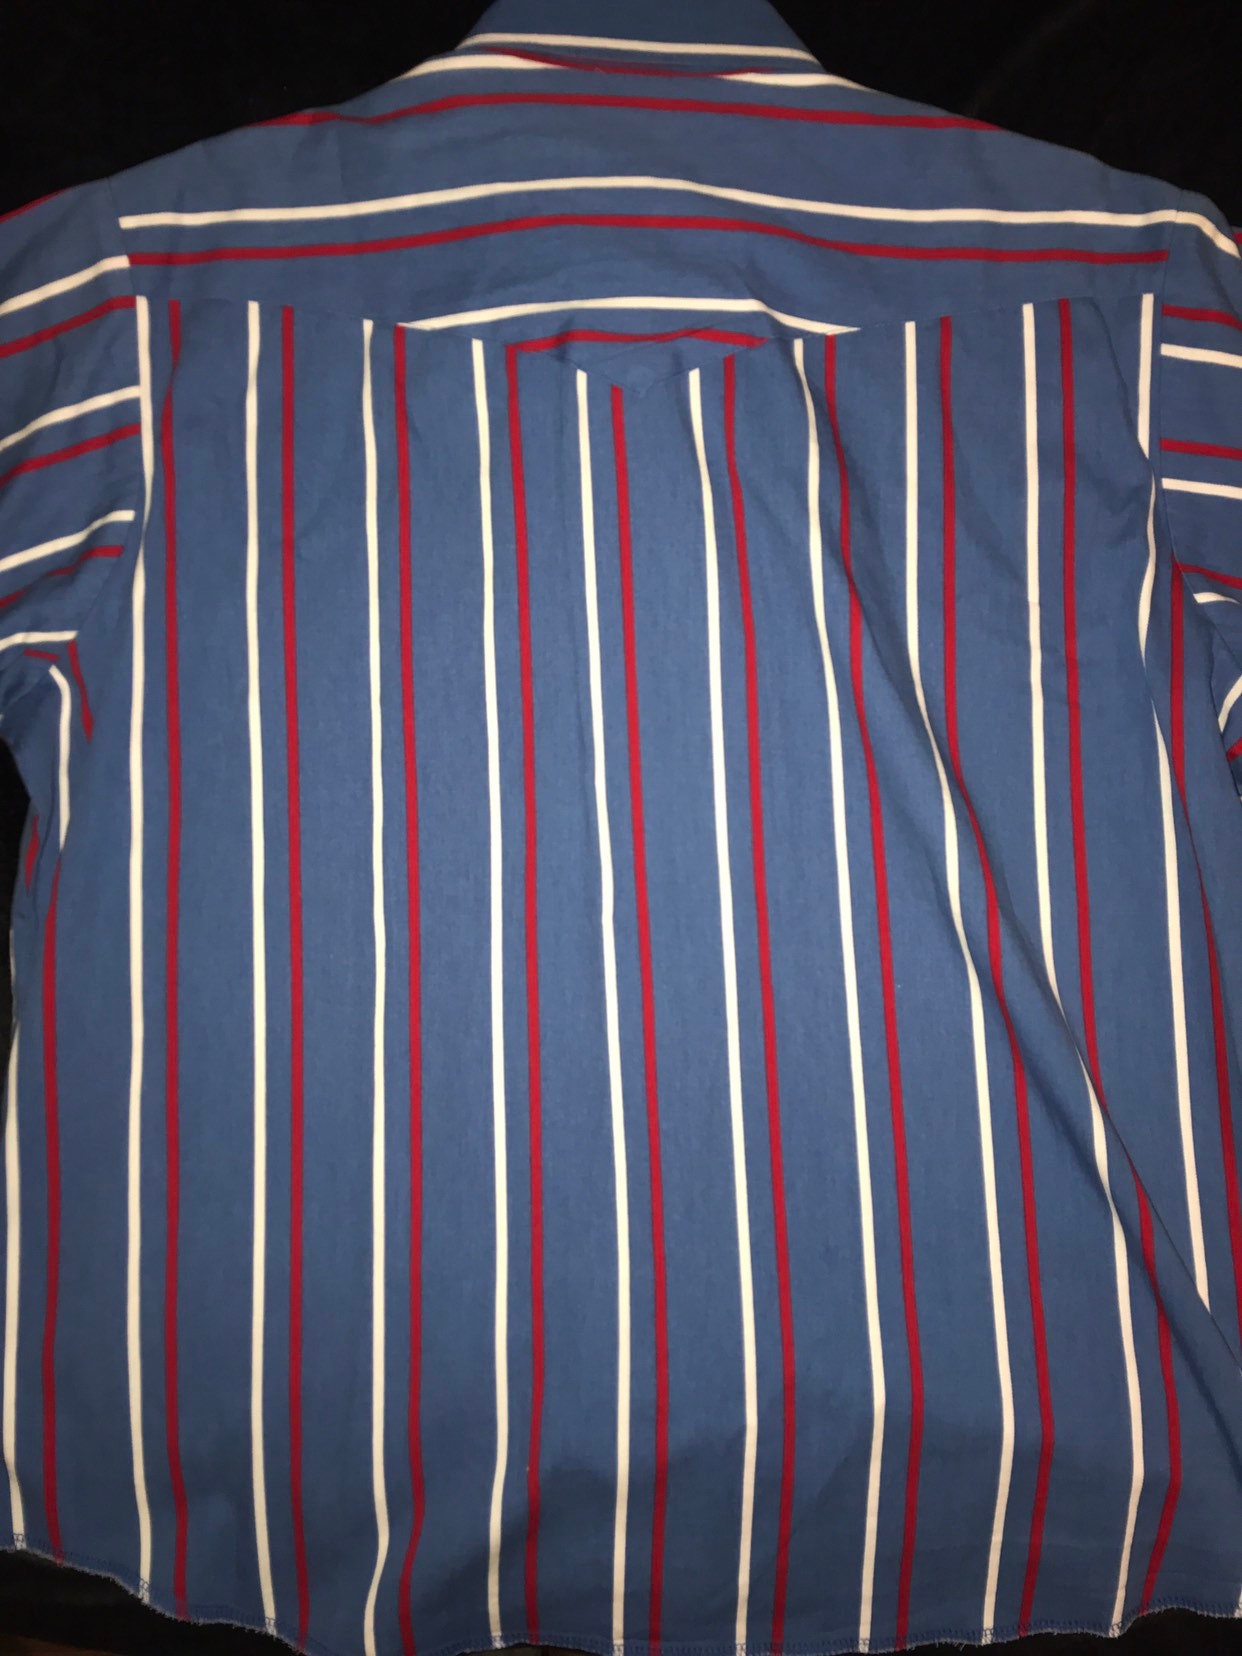 Vintage Wrangler Shirt. 70's Striped Wrangler Western Blue Pearl Snap Shirt.  Short Sleeve Wrangler Button Down Shirt. Blue Wrangler. Size XL